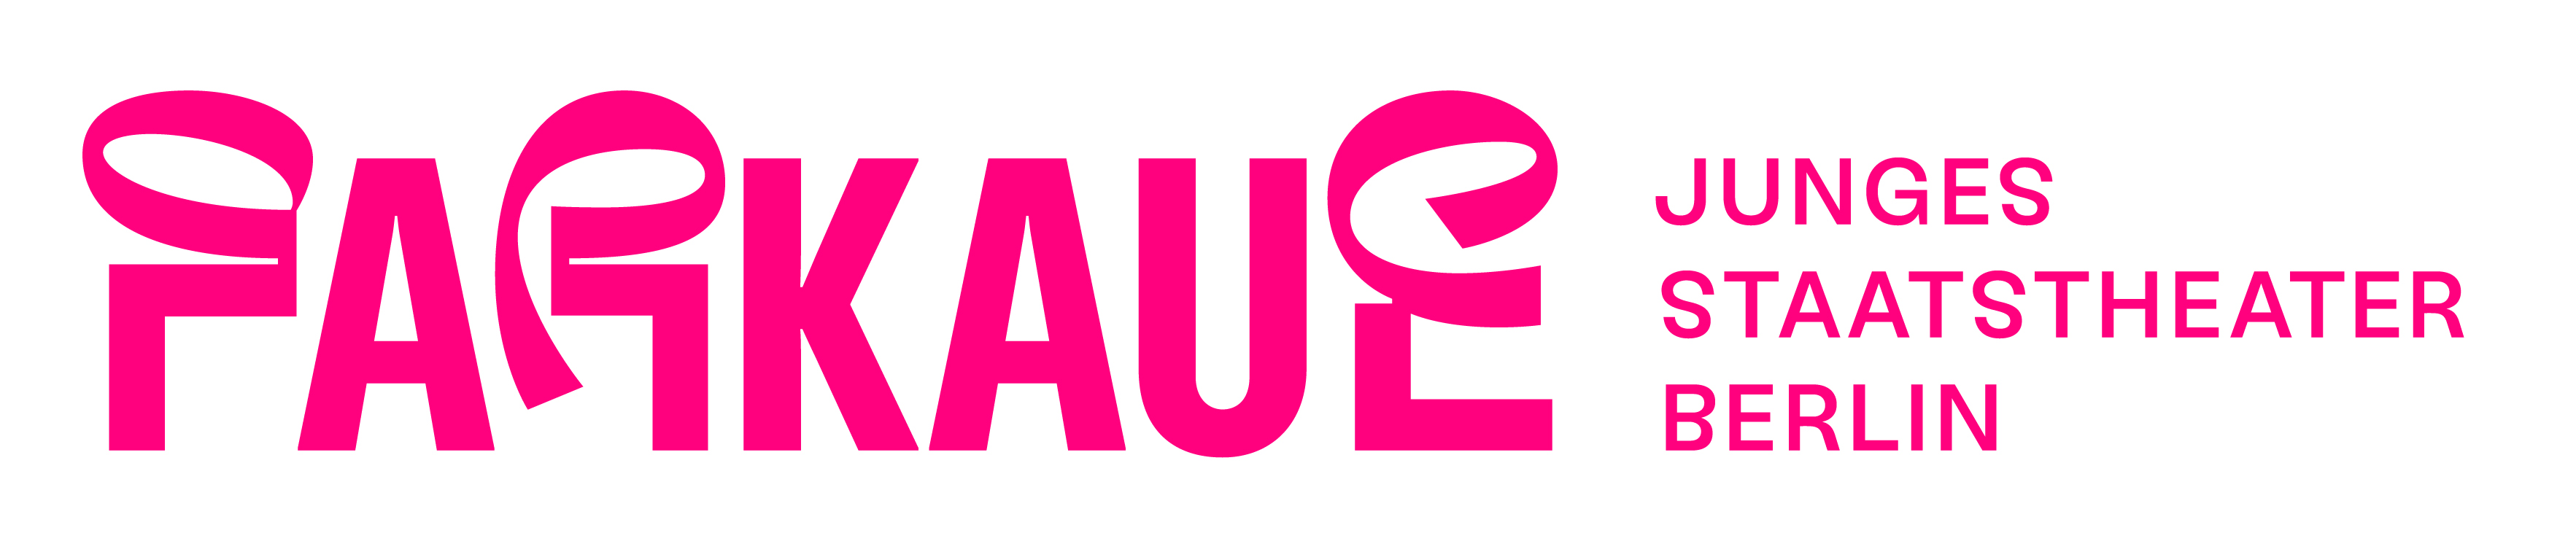 Parkaue logo